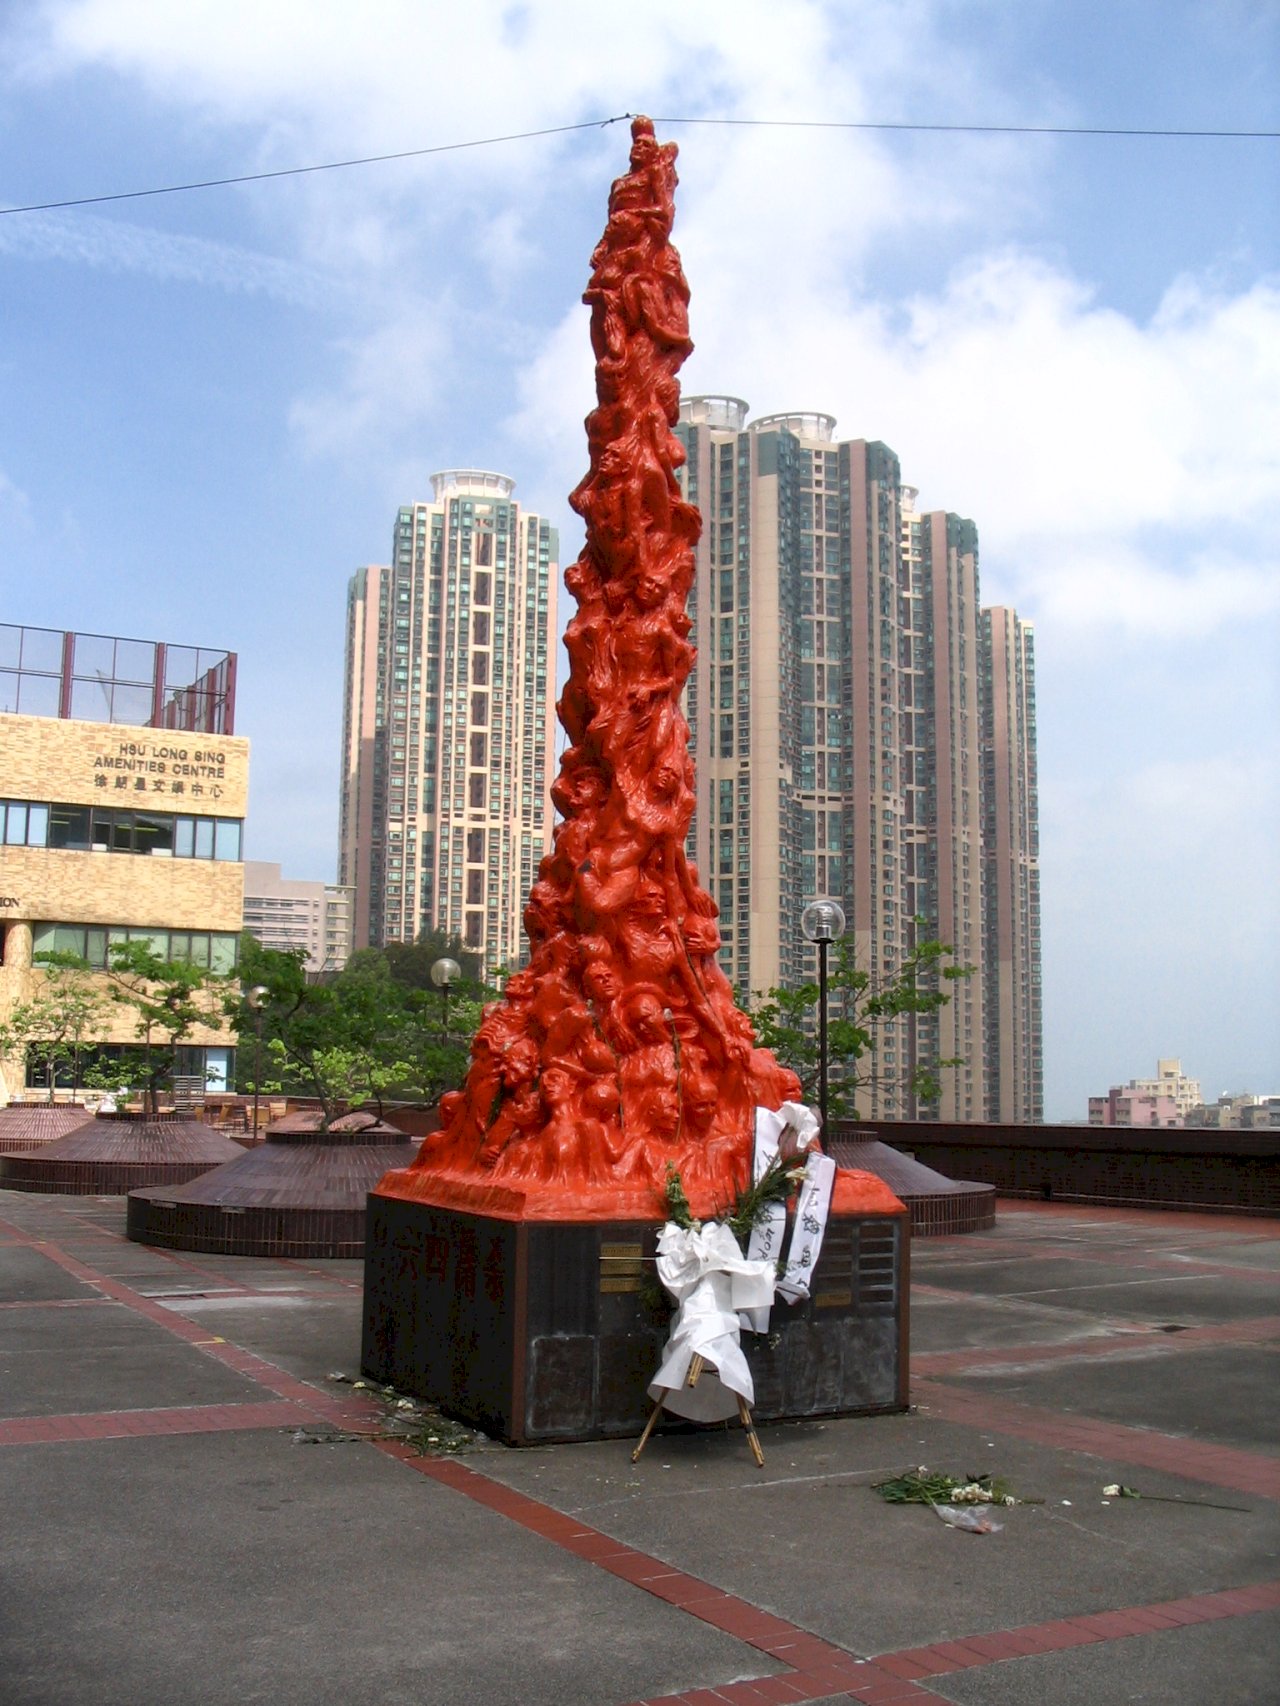 Taipei to unveil Pillar of Shame copy on Tiananmen Square anniversary